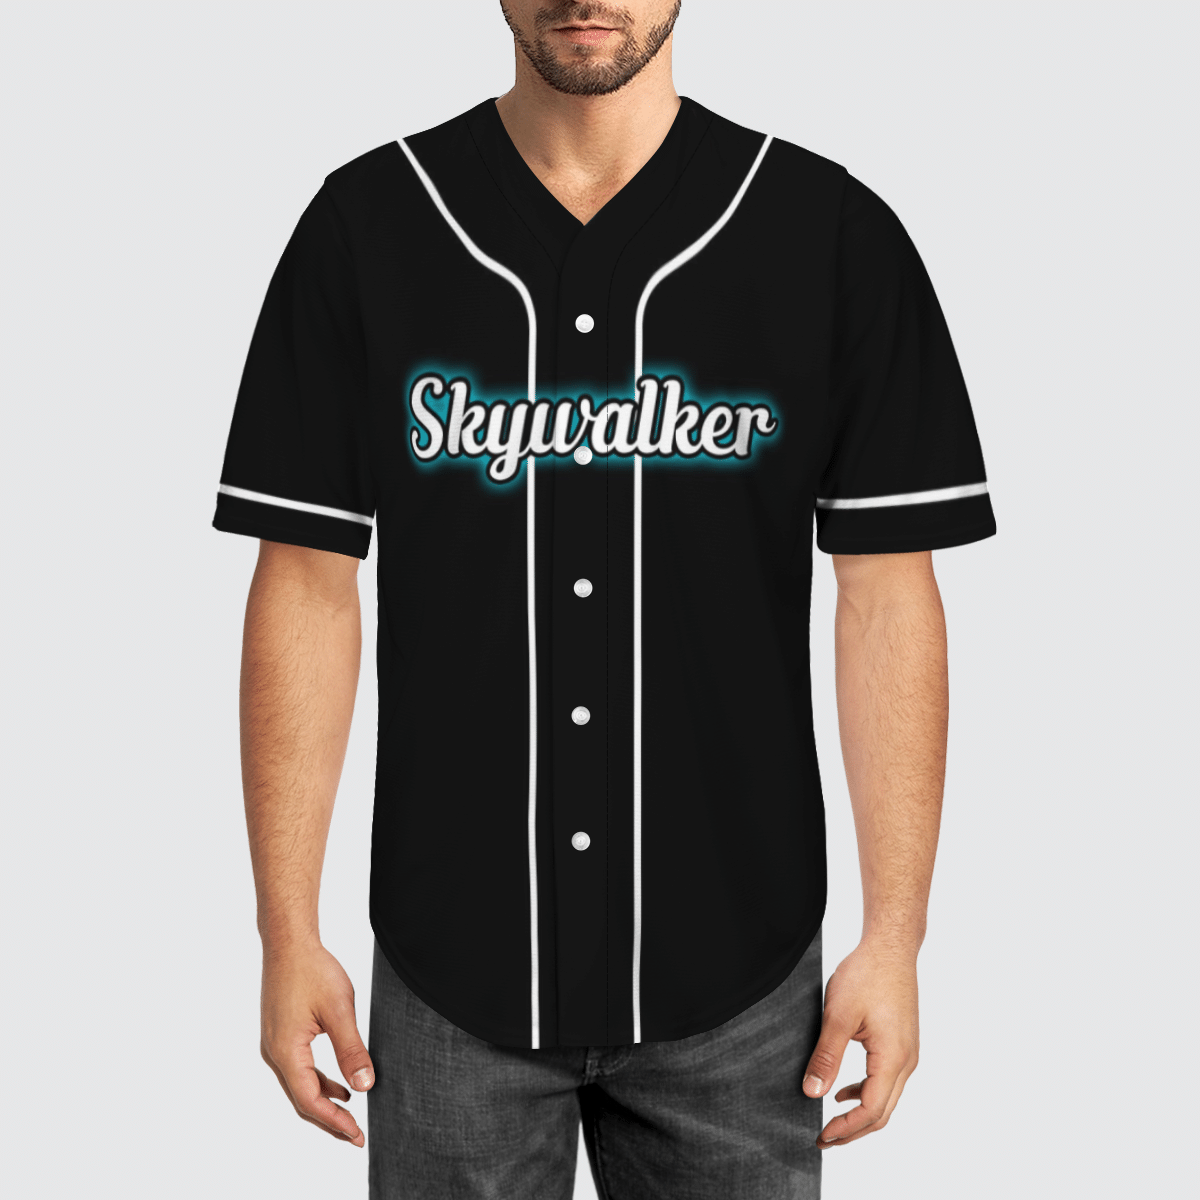 Skywalker Darth Vader baseball shirt – LIMITED EDITION